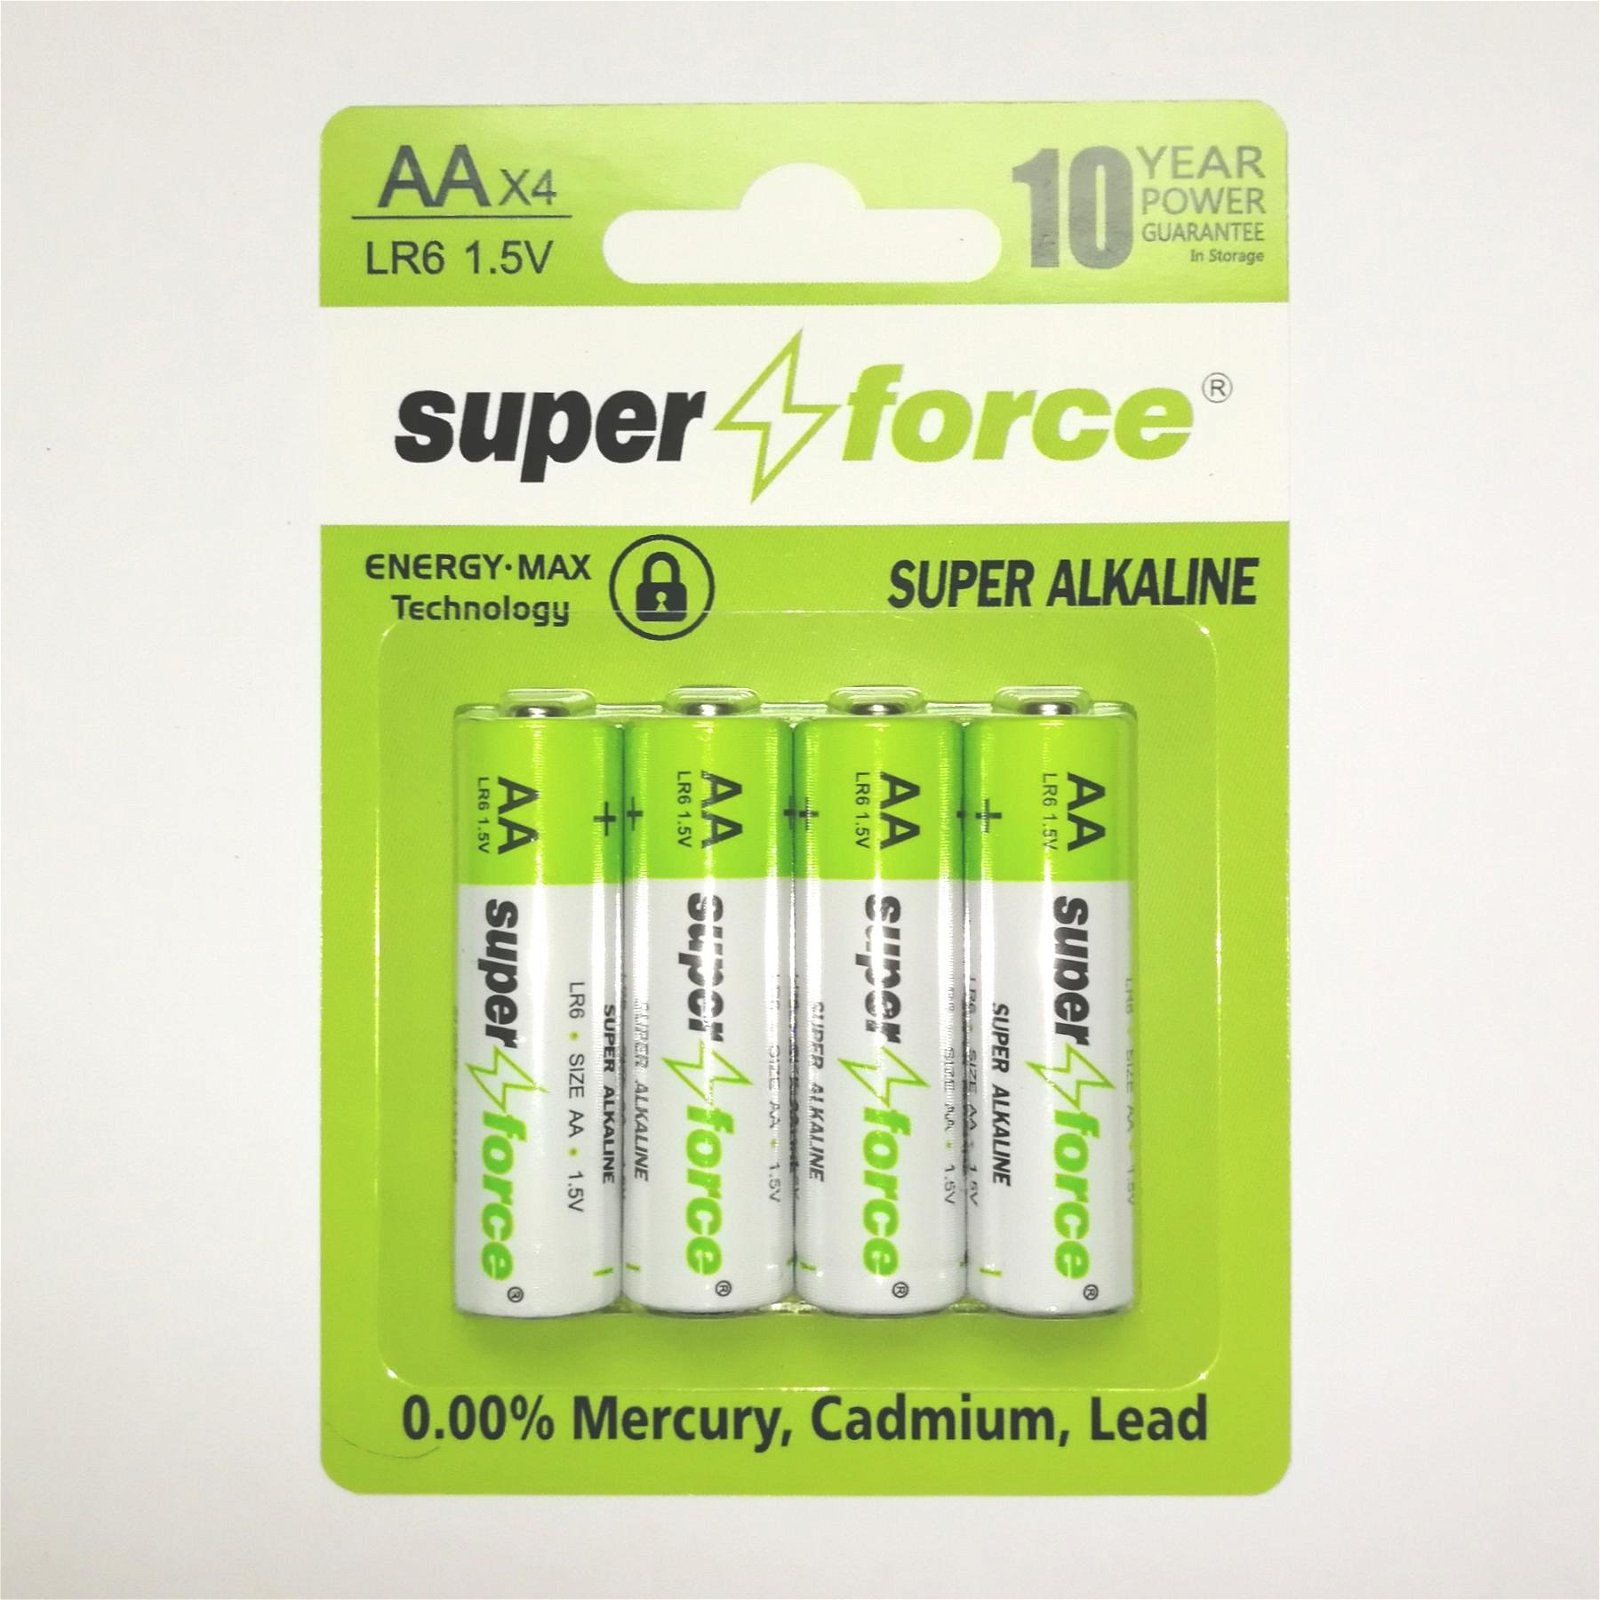 Super Alkaline Batteries LR6 AA 4 Pack